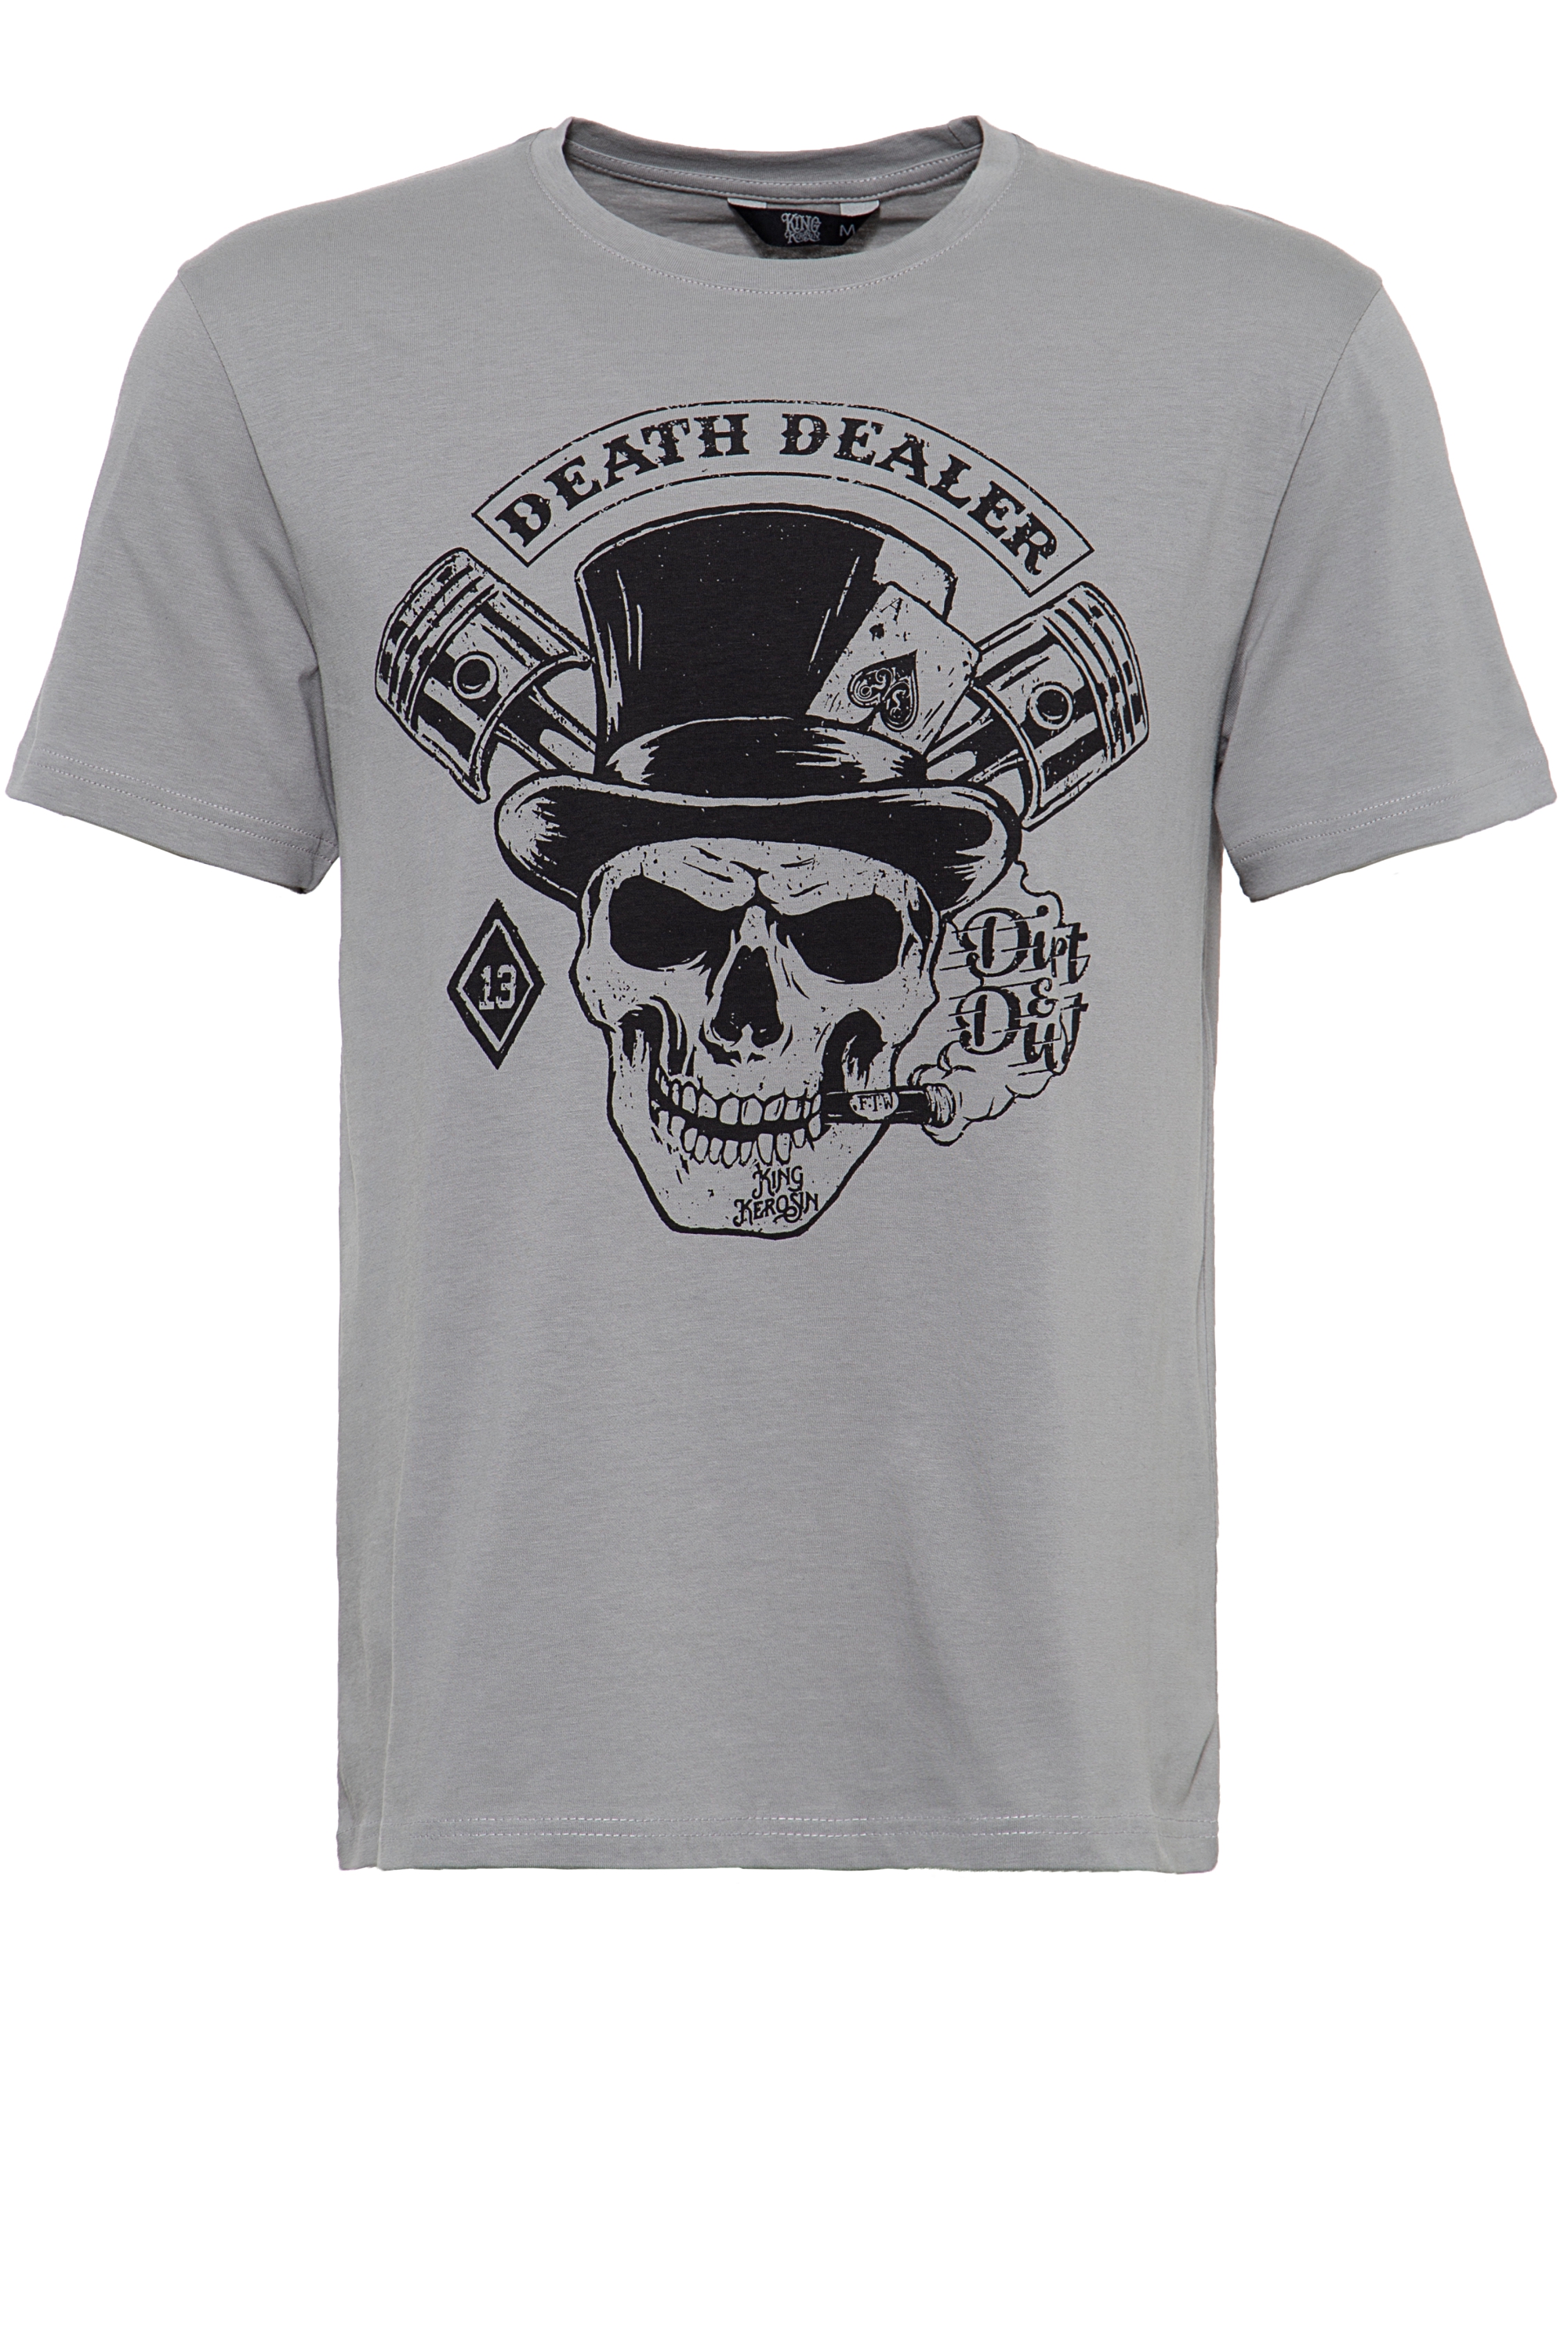 King Kerosin T-Shirt - Death Dealer 3XL